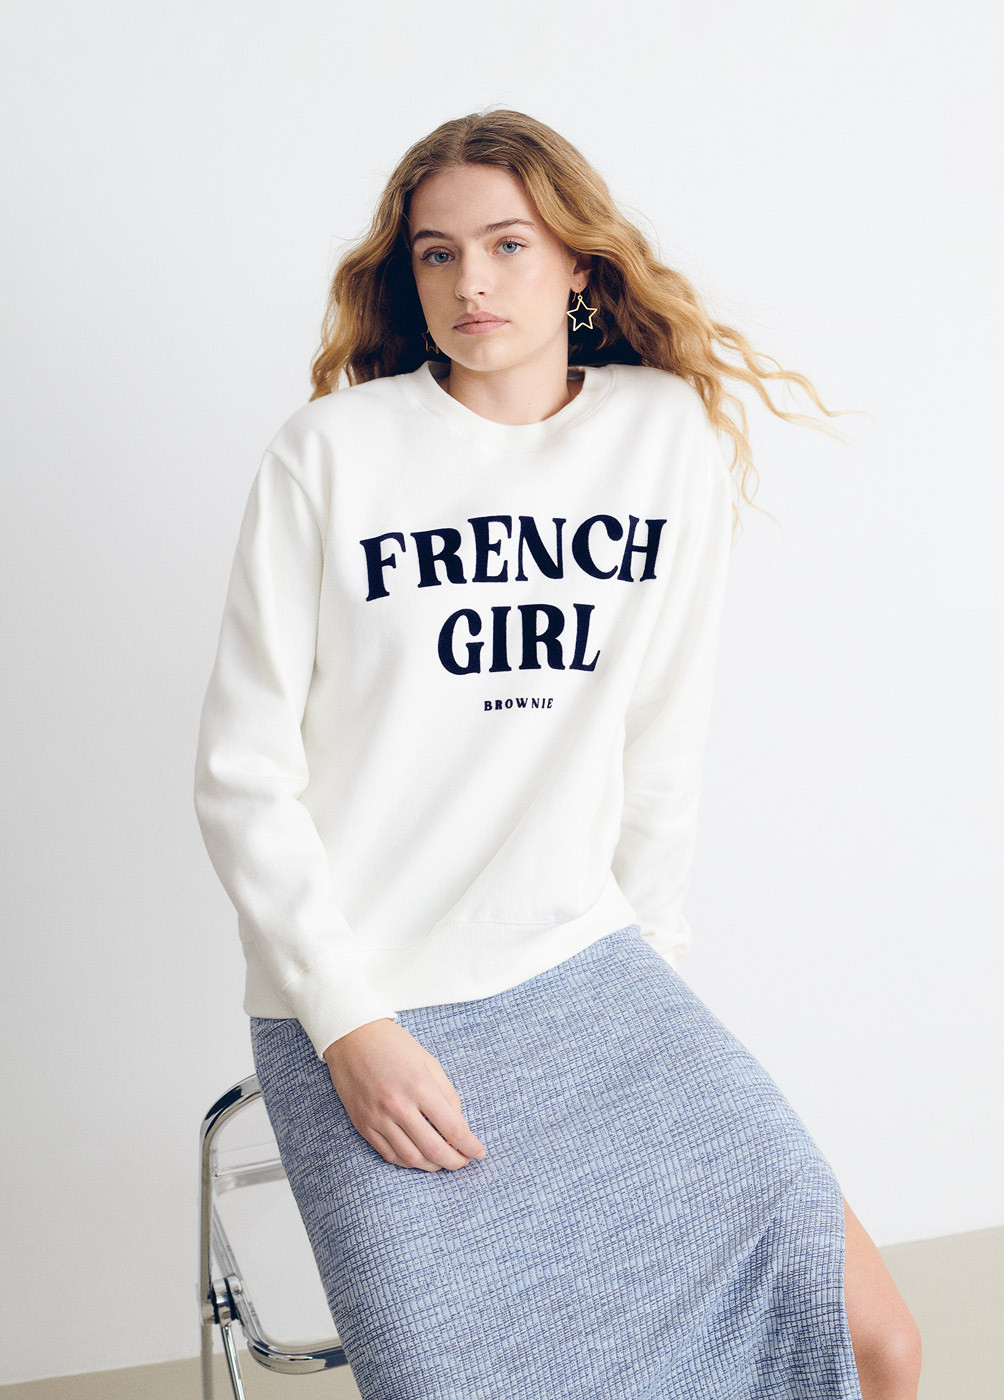 Sweatshirt mensagem french...